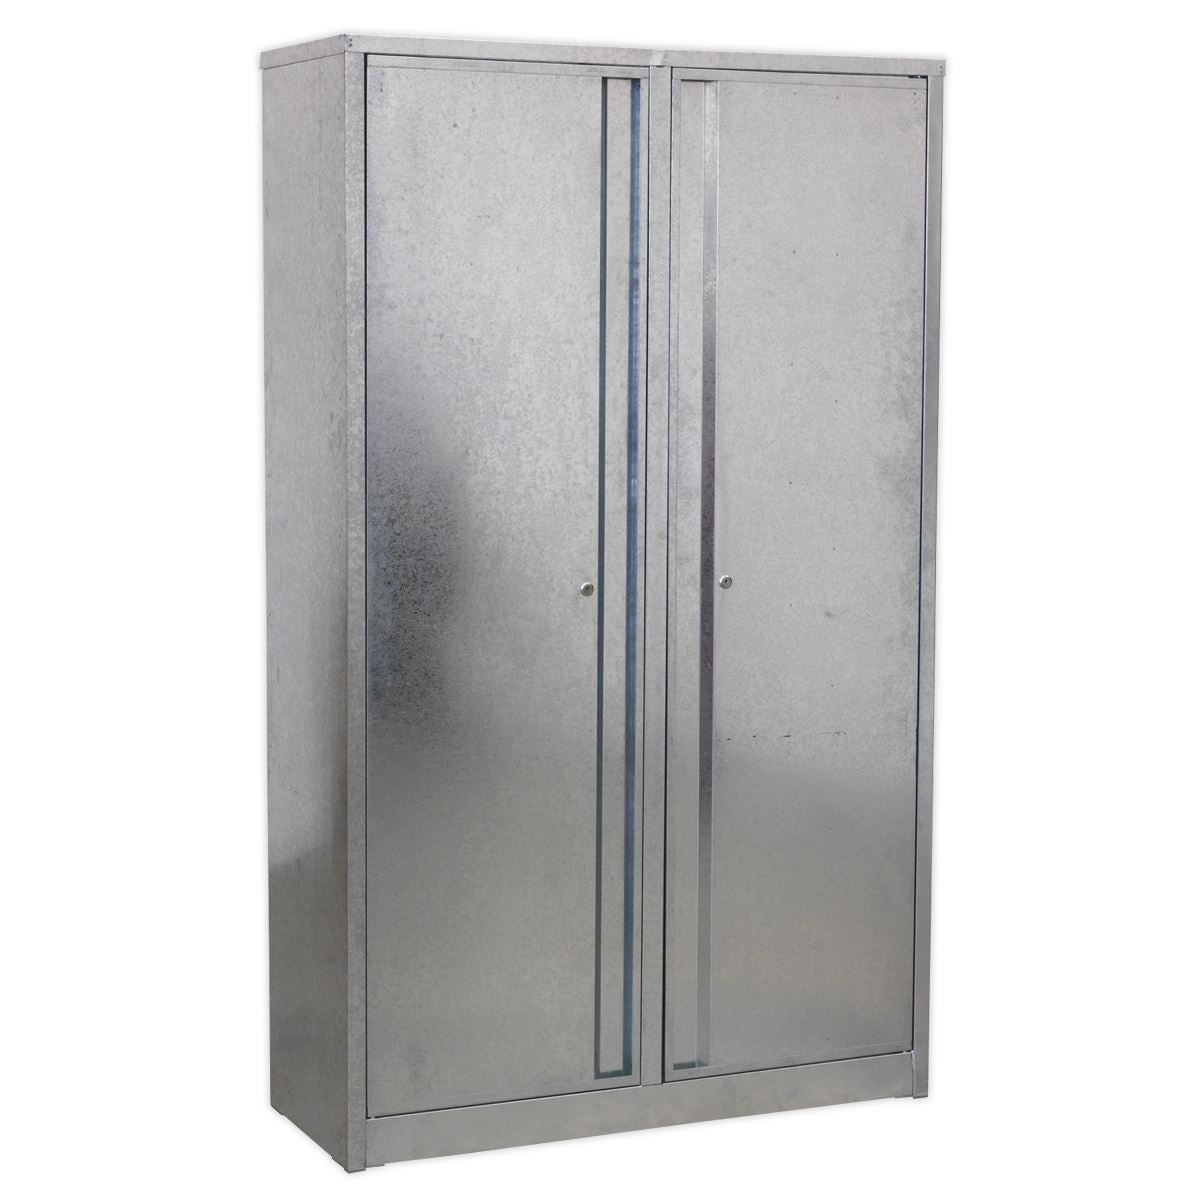 Sealey Galvanized Steel Floor Cabinet 4-Shelf Extra-Wide